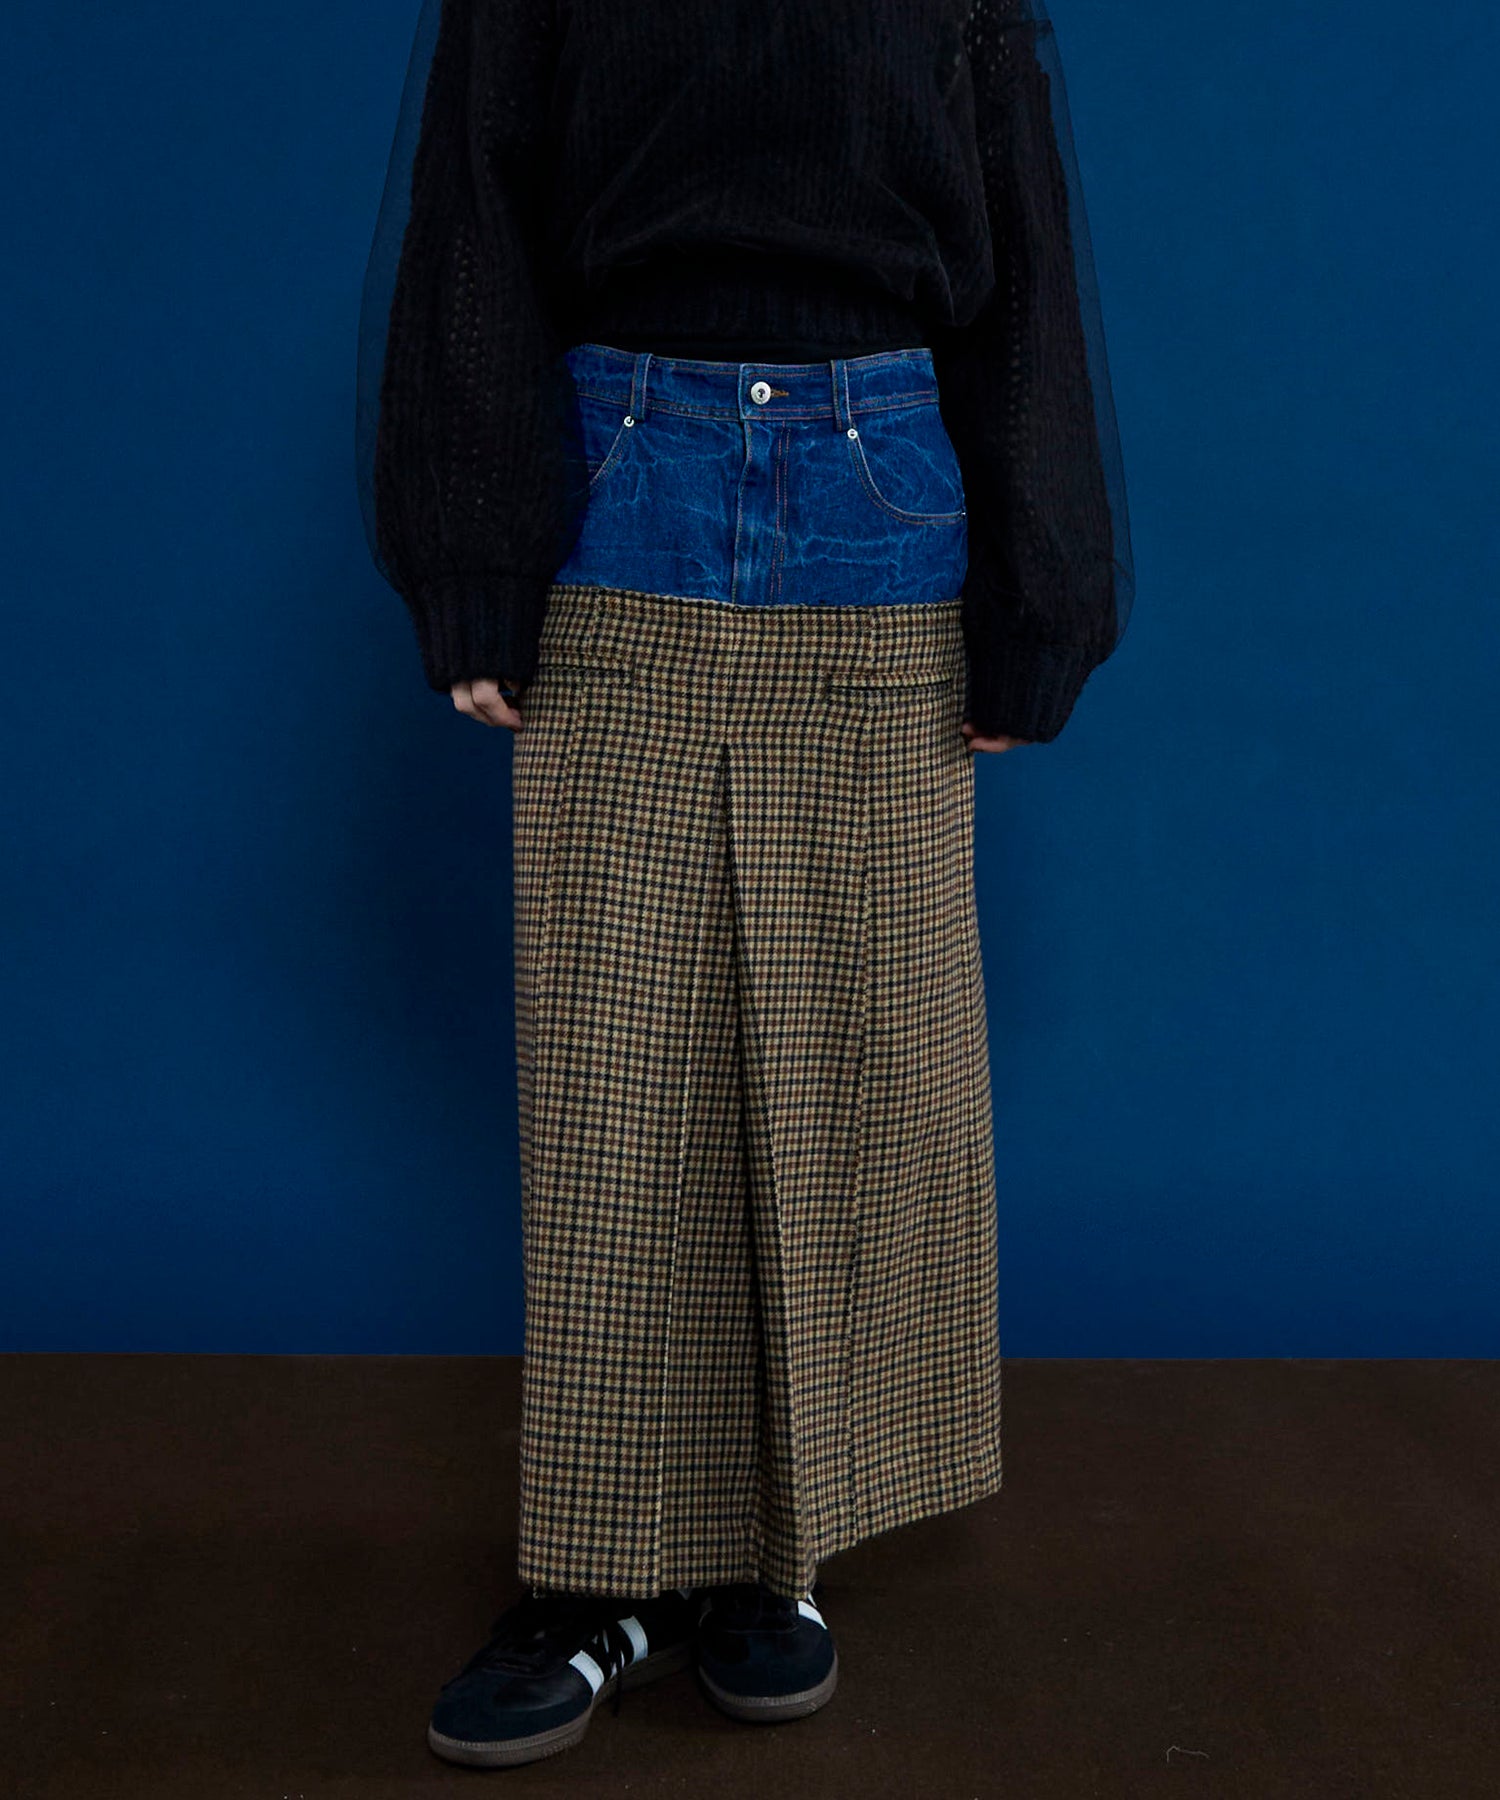 【24AUTUMN PRE-ORDER】Tweed Layered Box Pleated Skirt